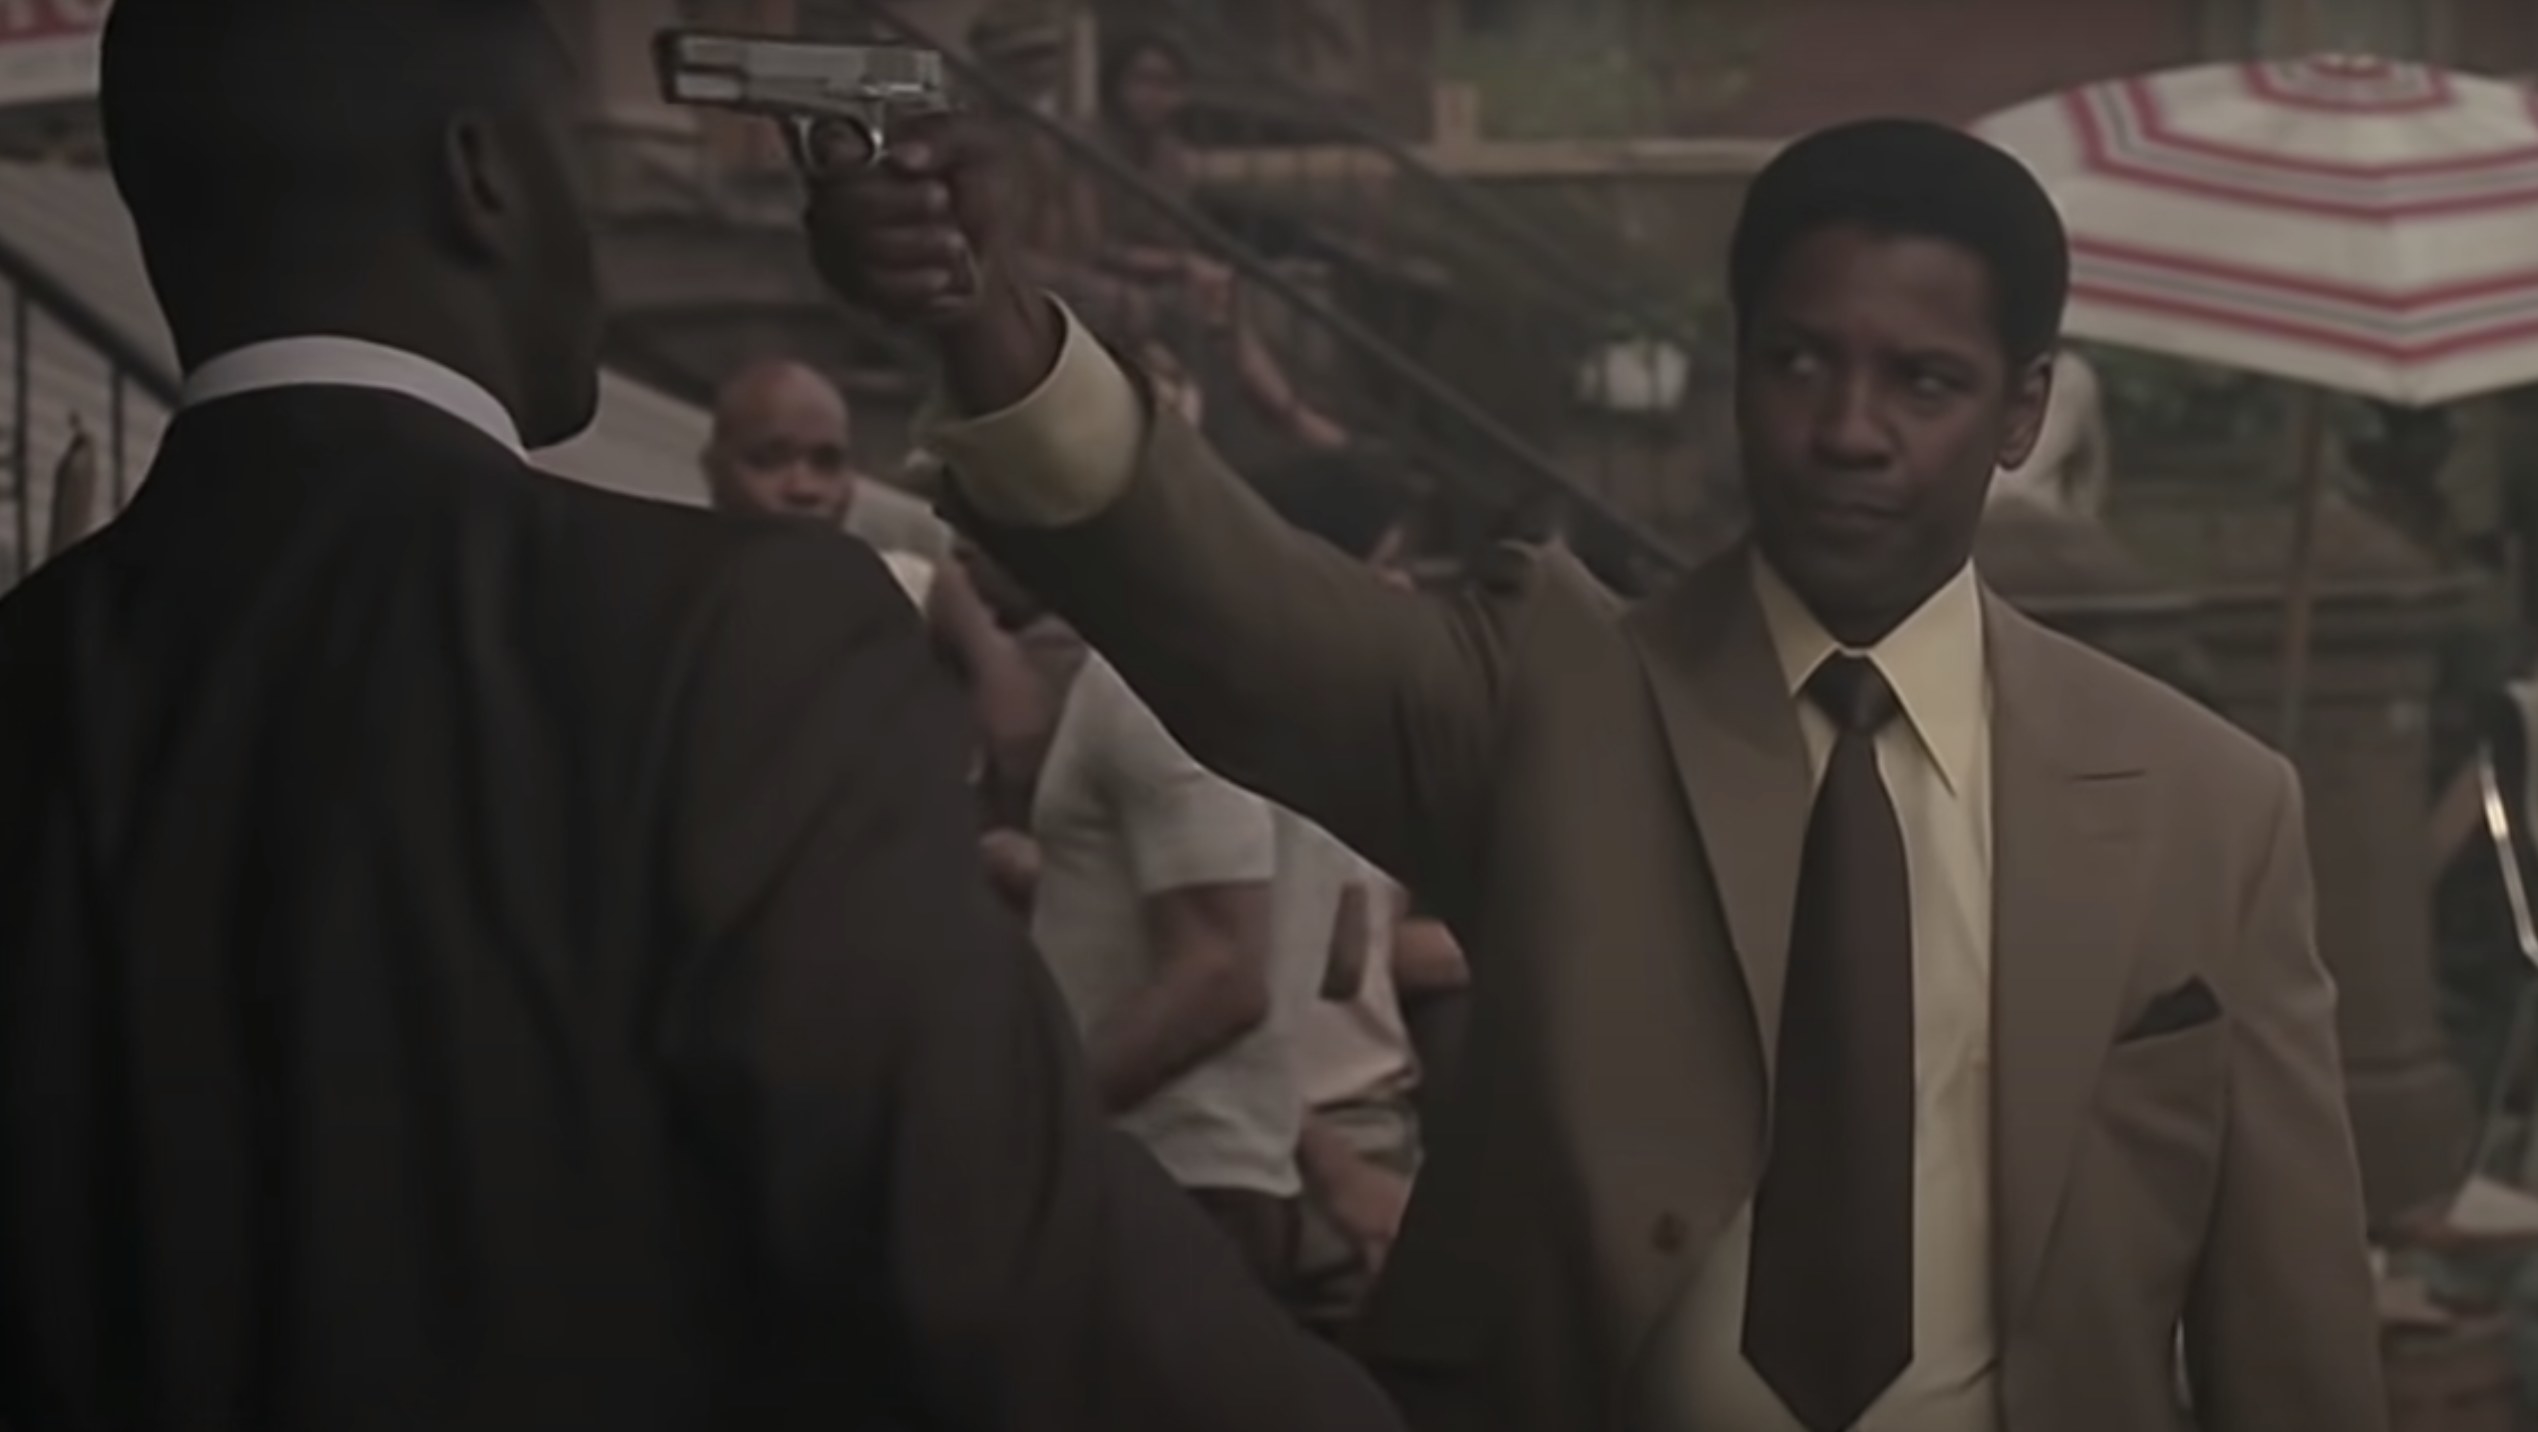 Idris Elba Thought American Gangster's Denzel Washington Shot Him